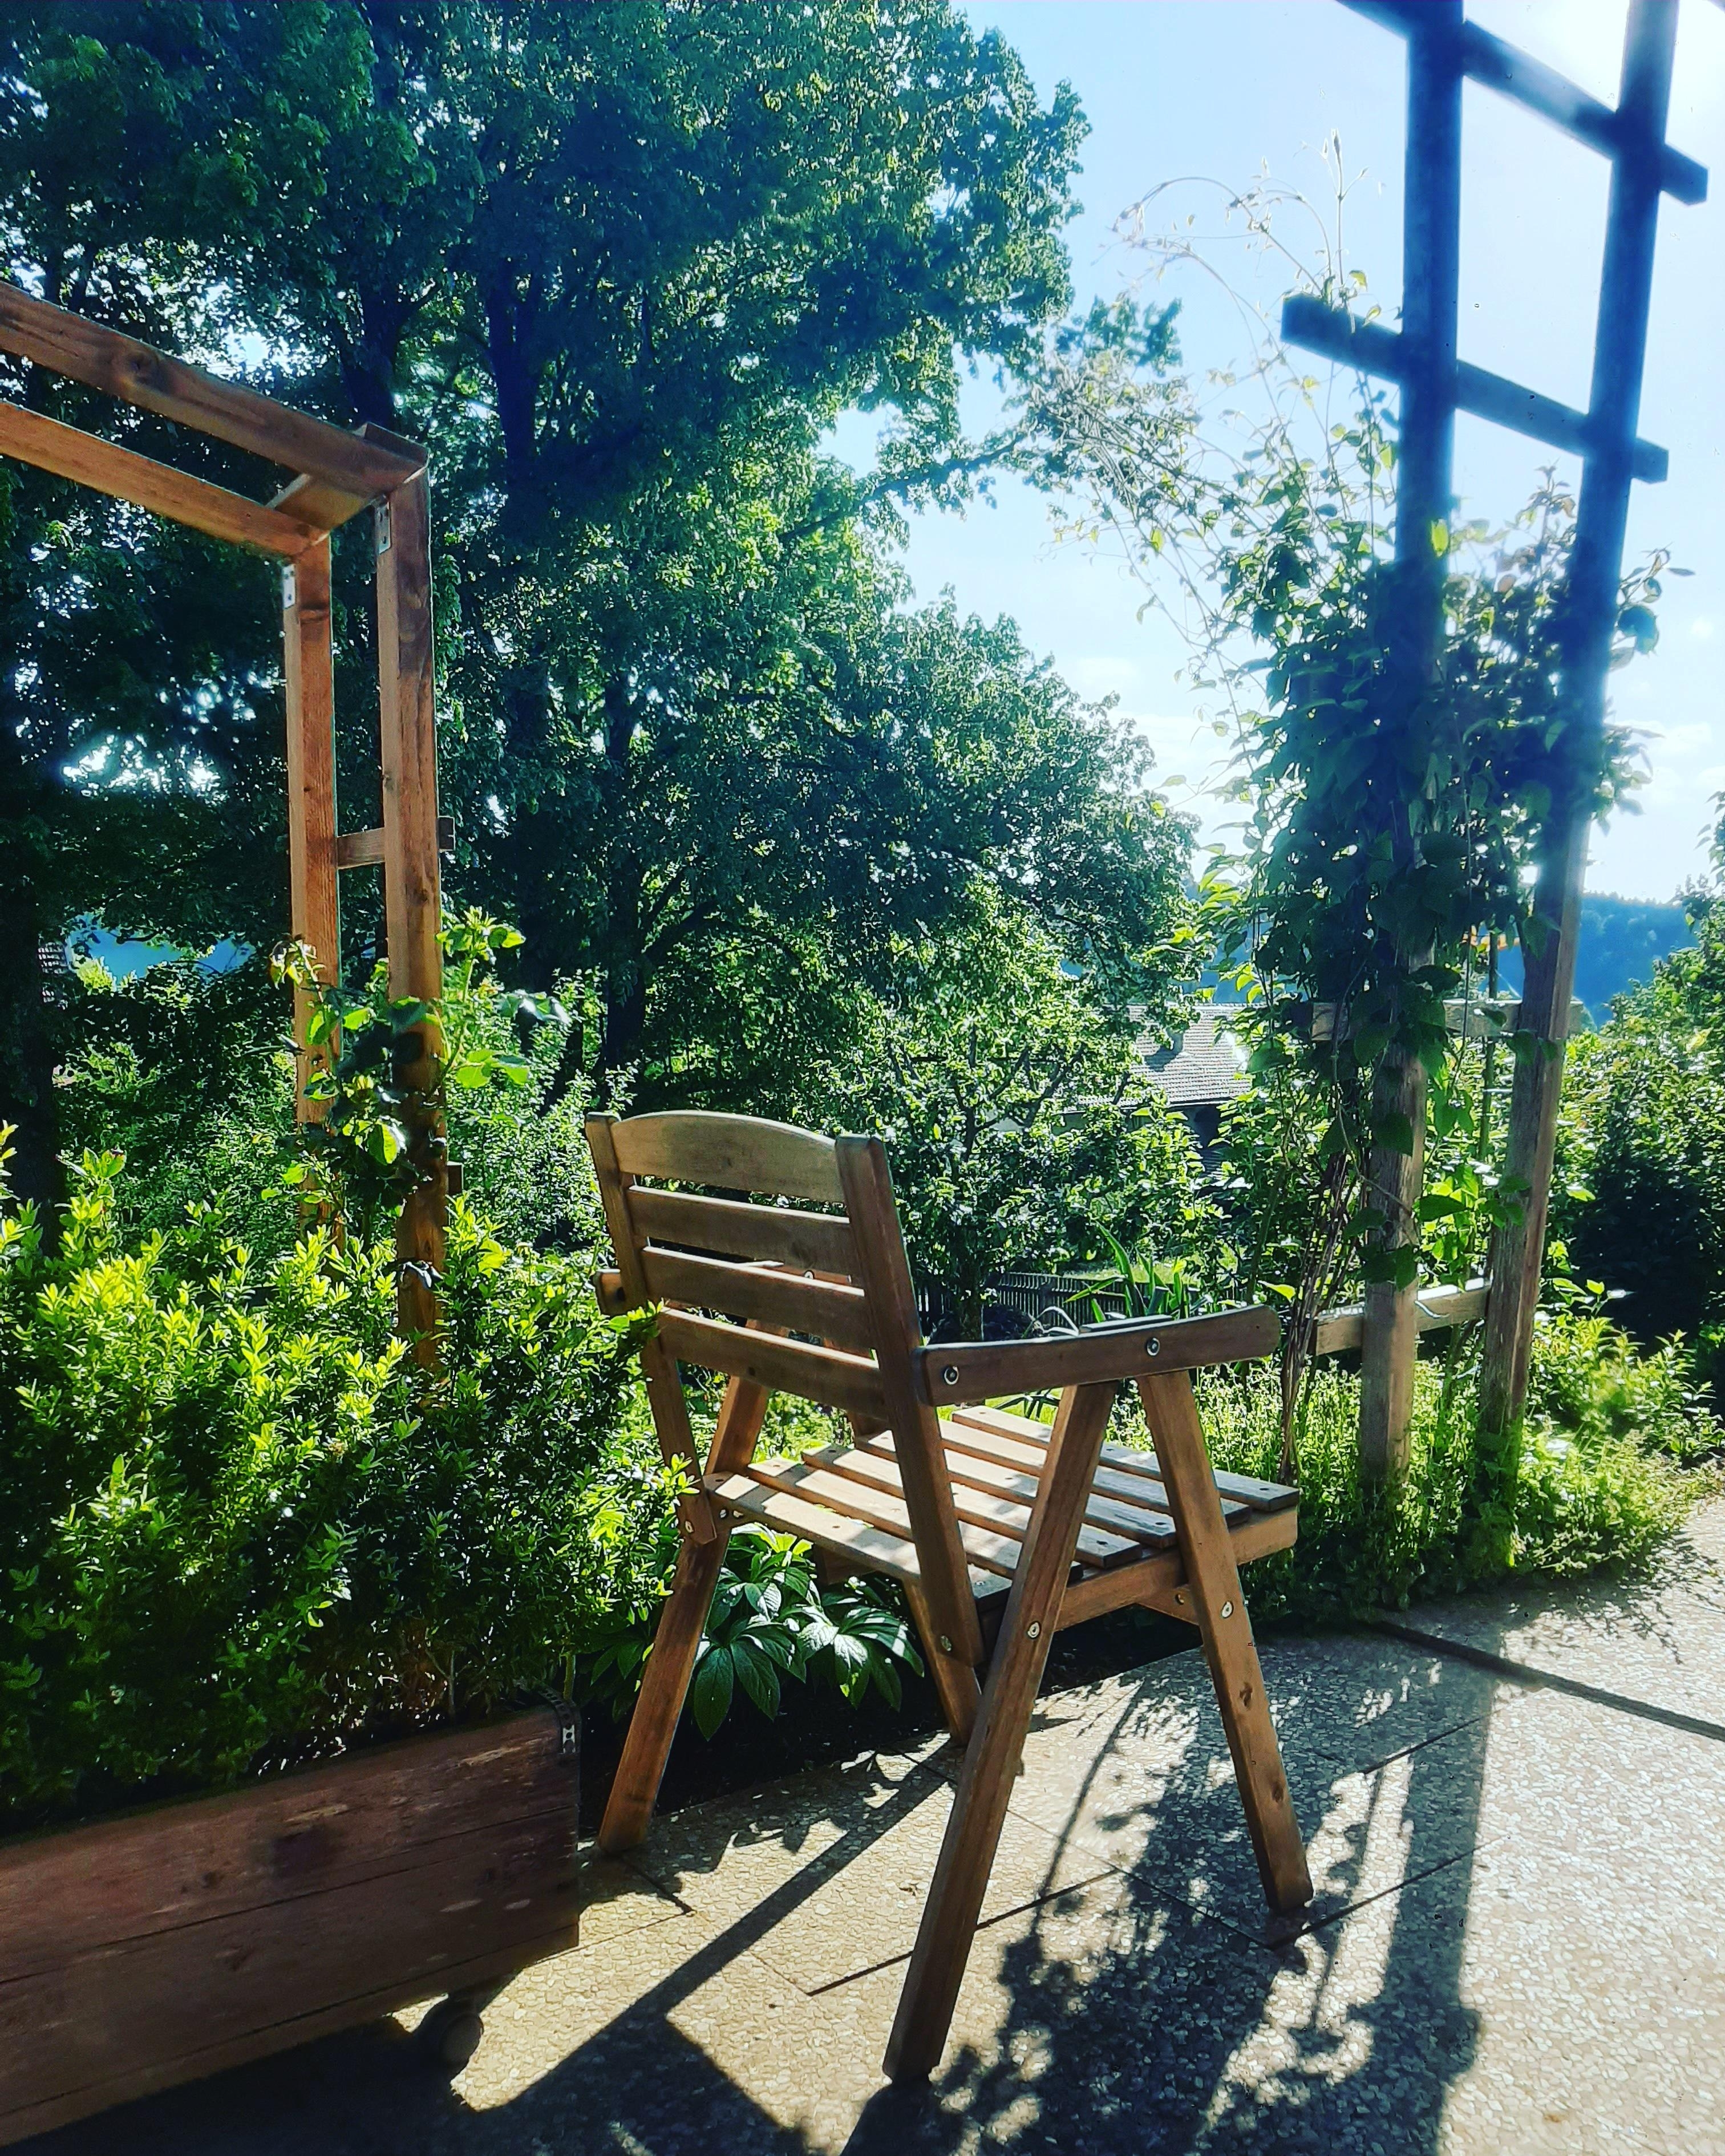 What a day for a daydream #terrasse #perfectday #einmalantoastenbitte